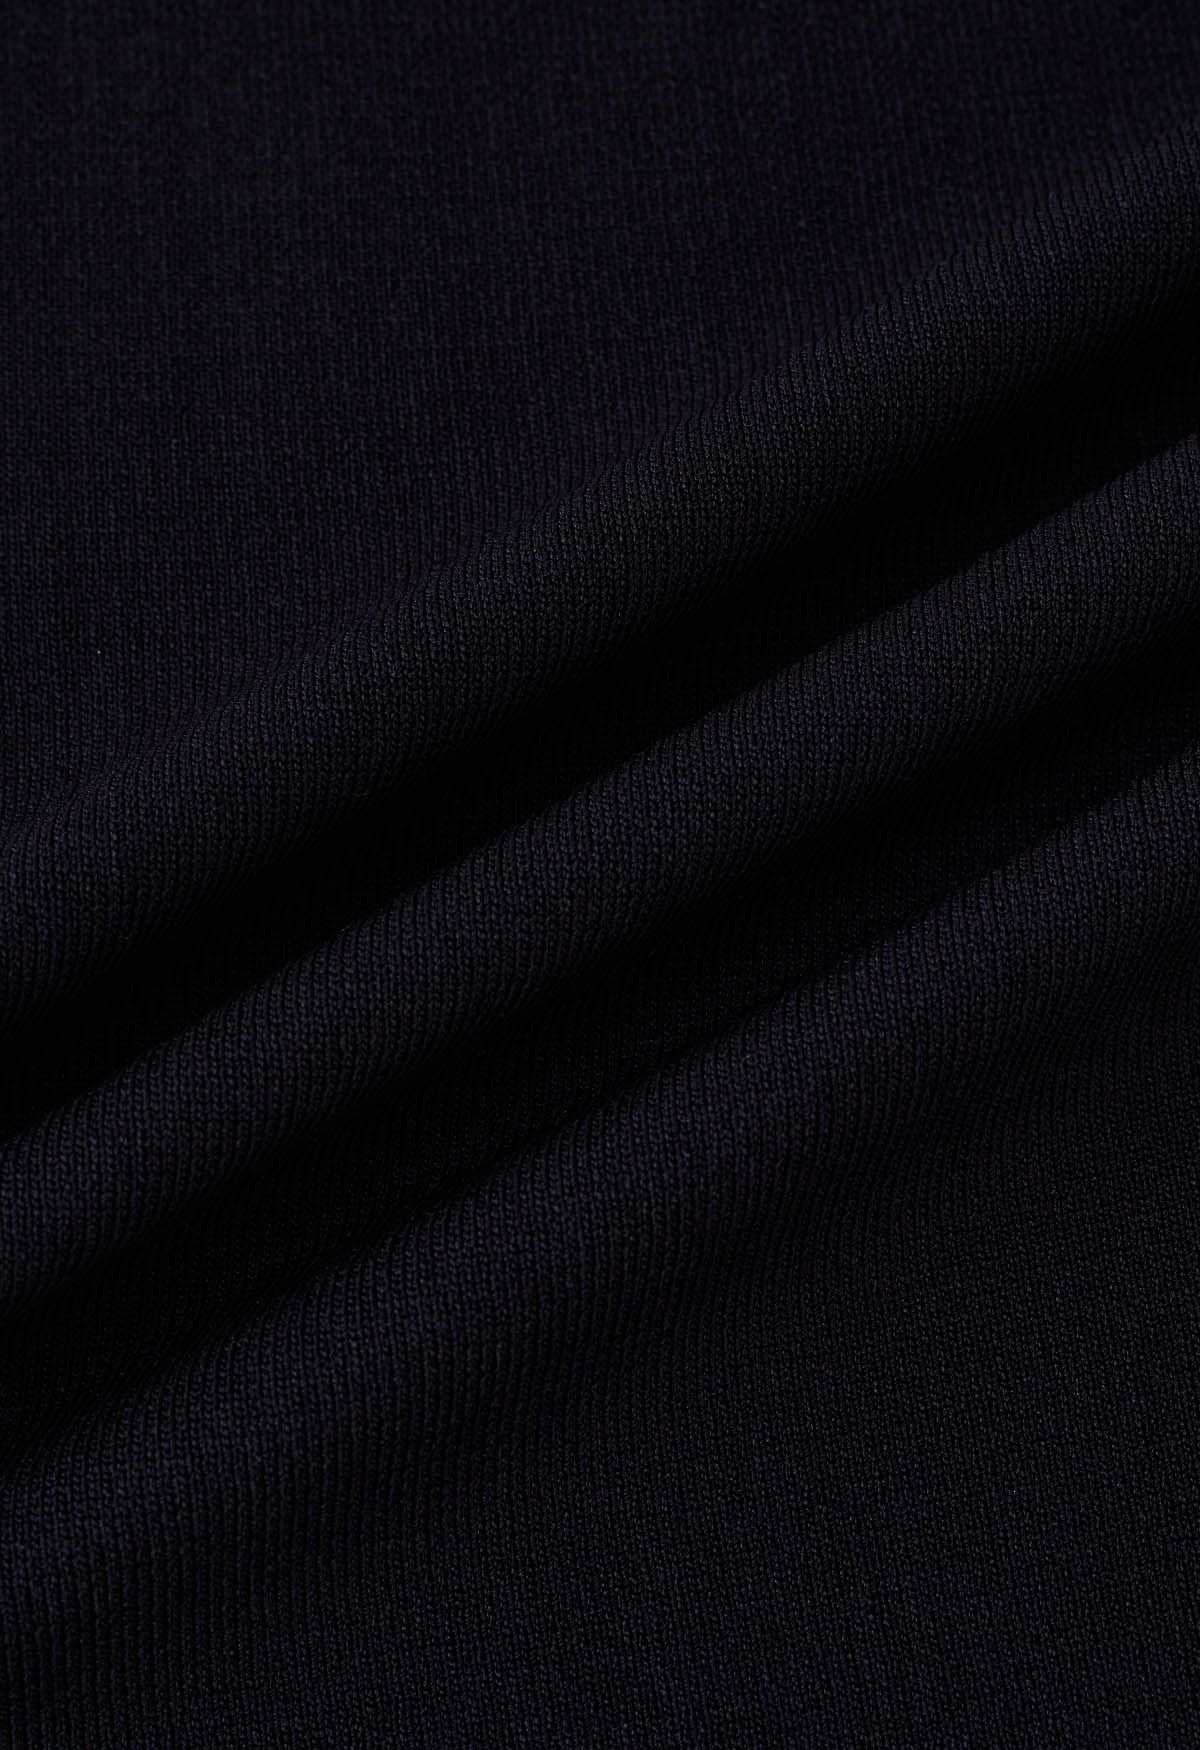 Cutout Neckline Bodycon Knit Dress in Black